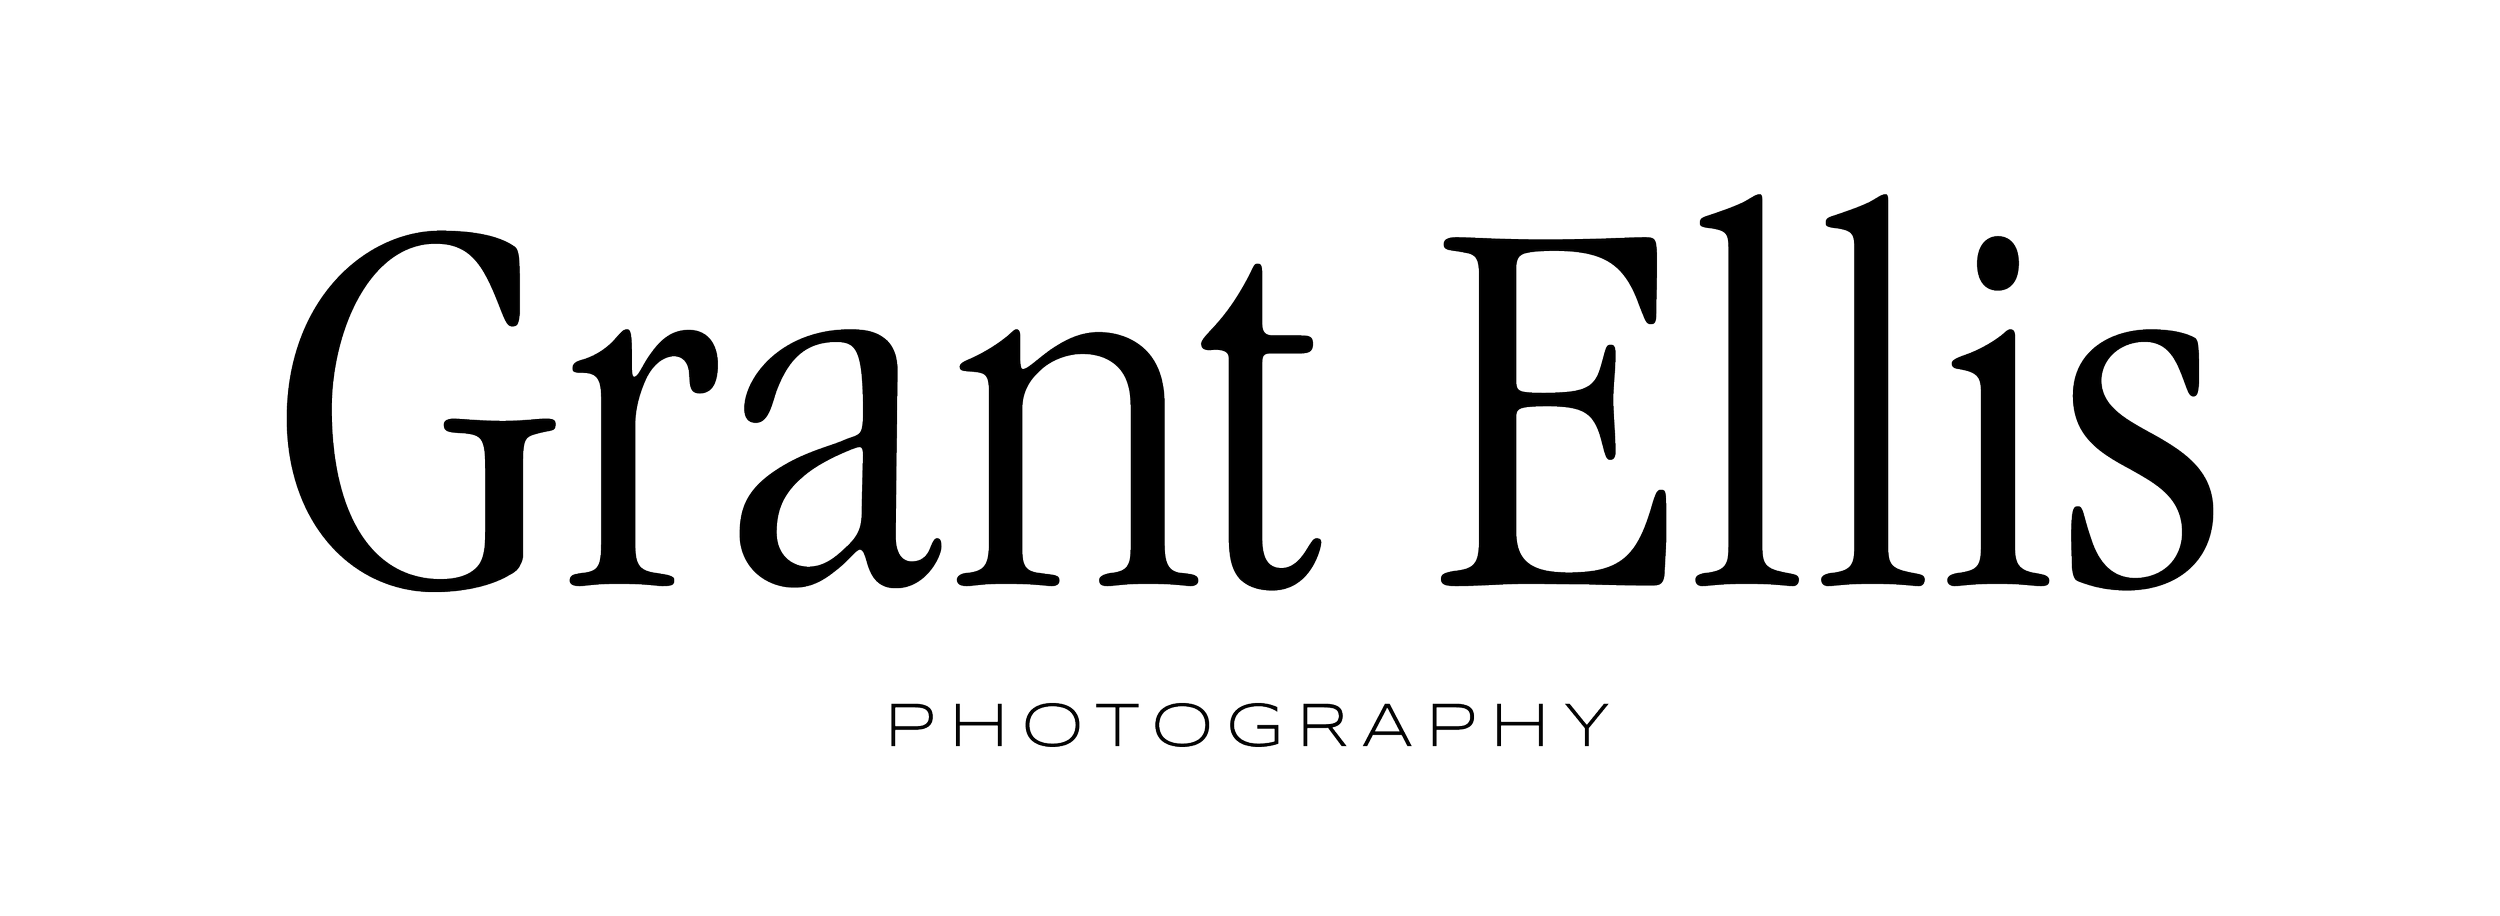 Grant-Ellis-Photography-Surf-logo-linear-black.png